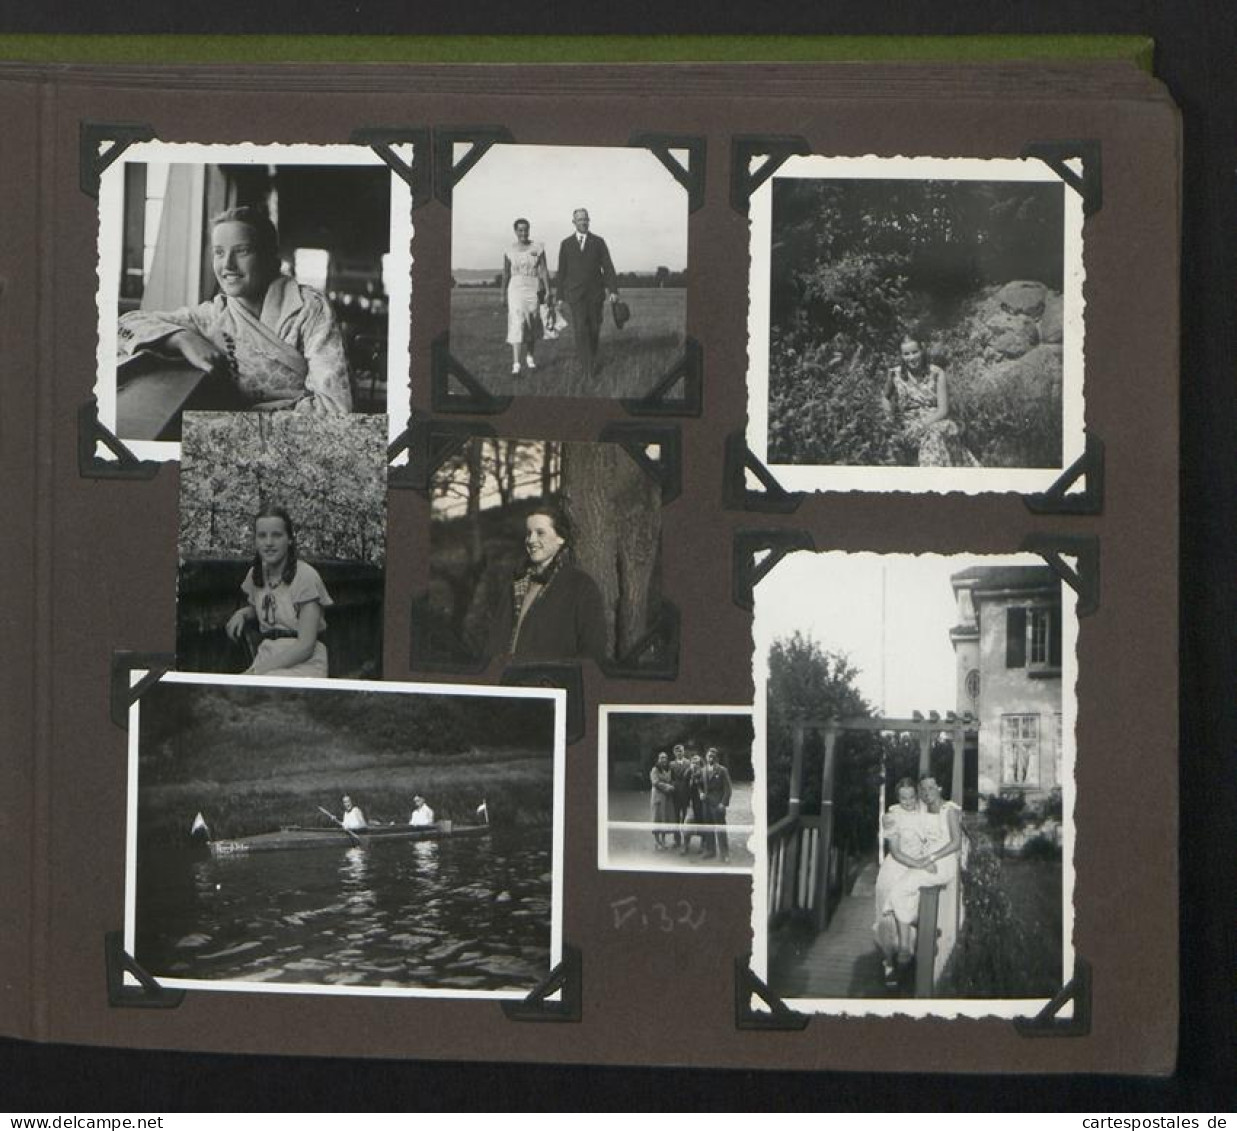 Fotoalbum Mit 150 Fotografien, Giessen Studenten, Theater, Militär, Soldaten, Fussball, Wappen  - Albumes & Colecciones